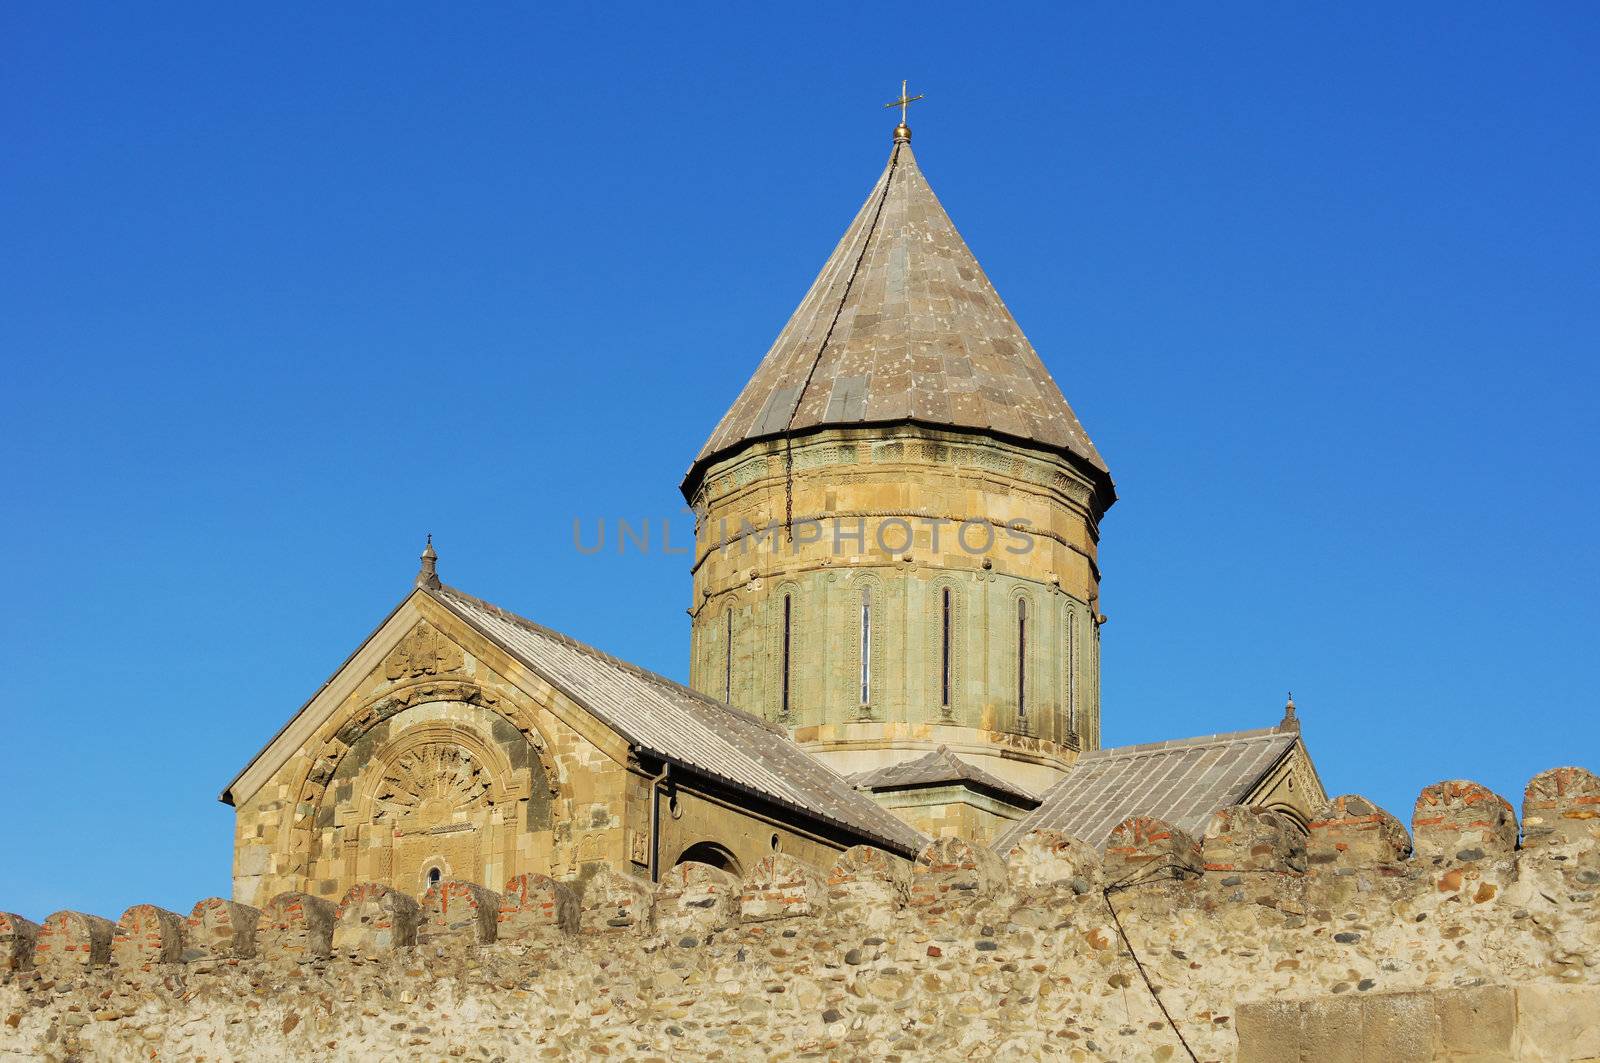 Georgia - Mtskheta - Sveticxoveli castle-cathedral, one of the symbols of Georgia